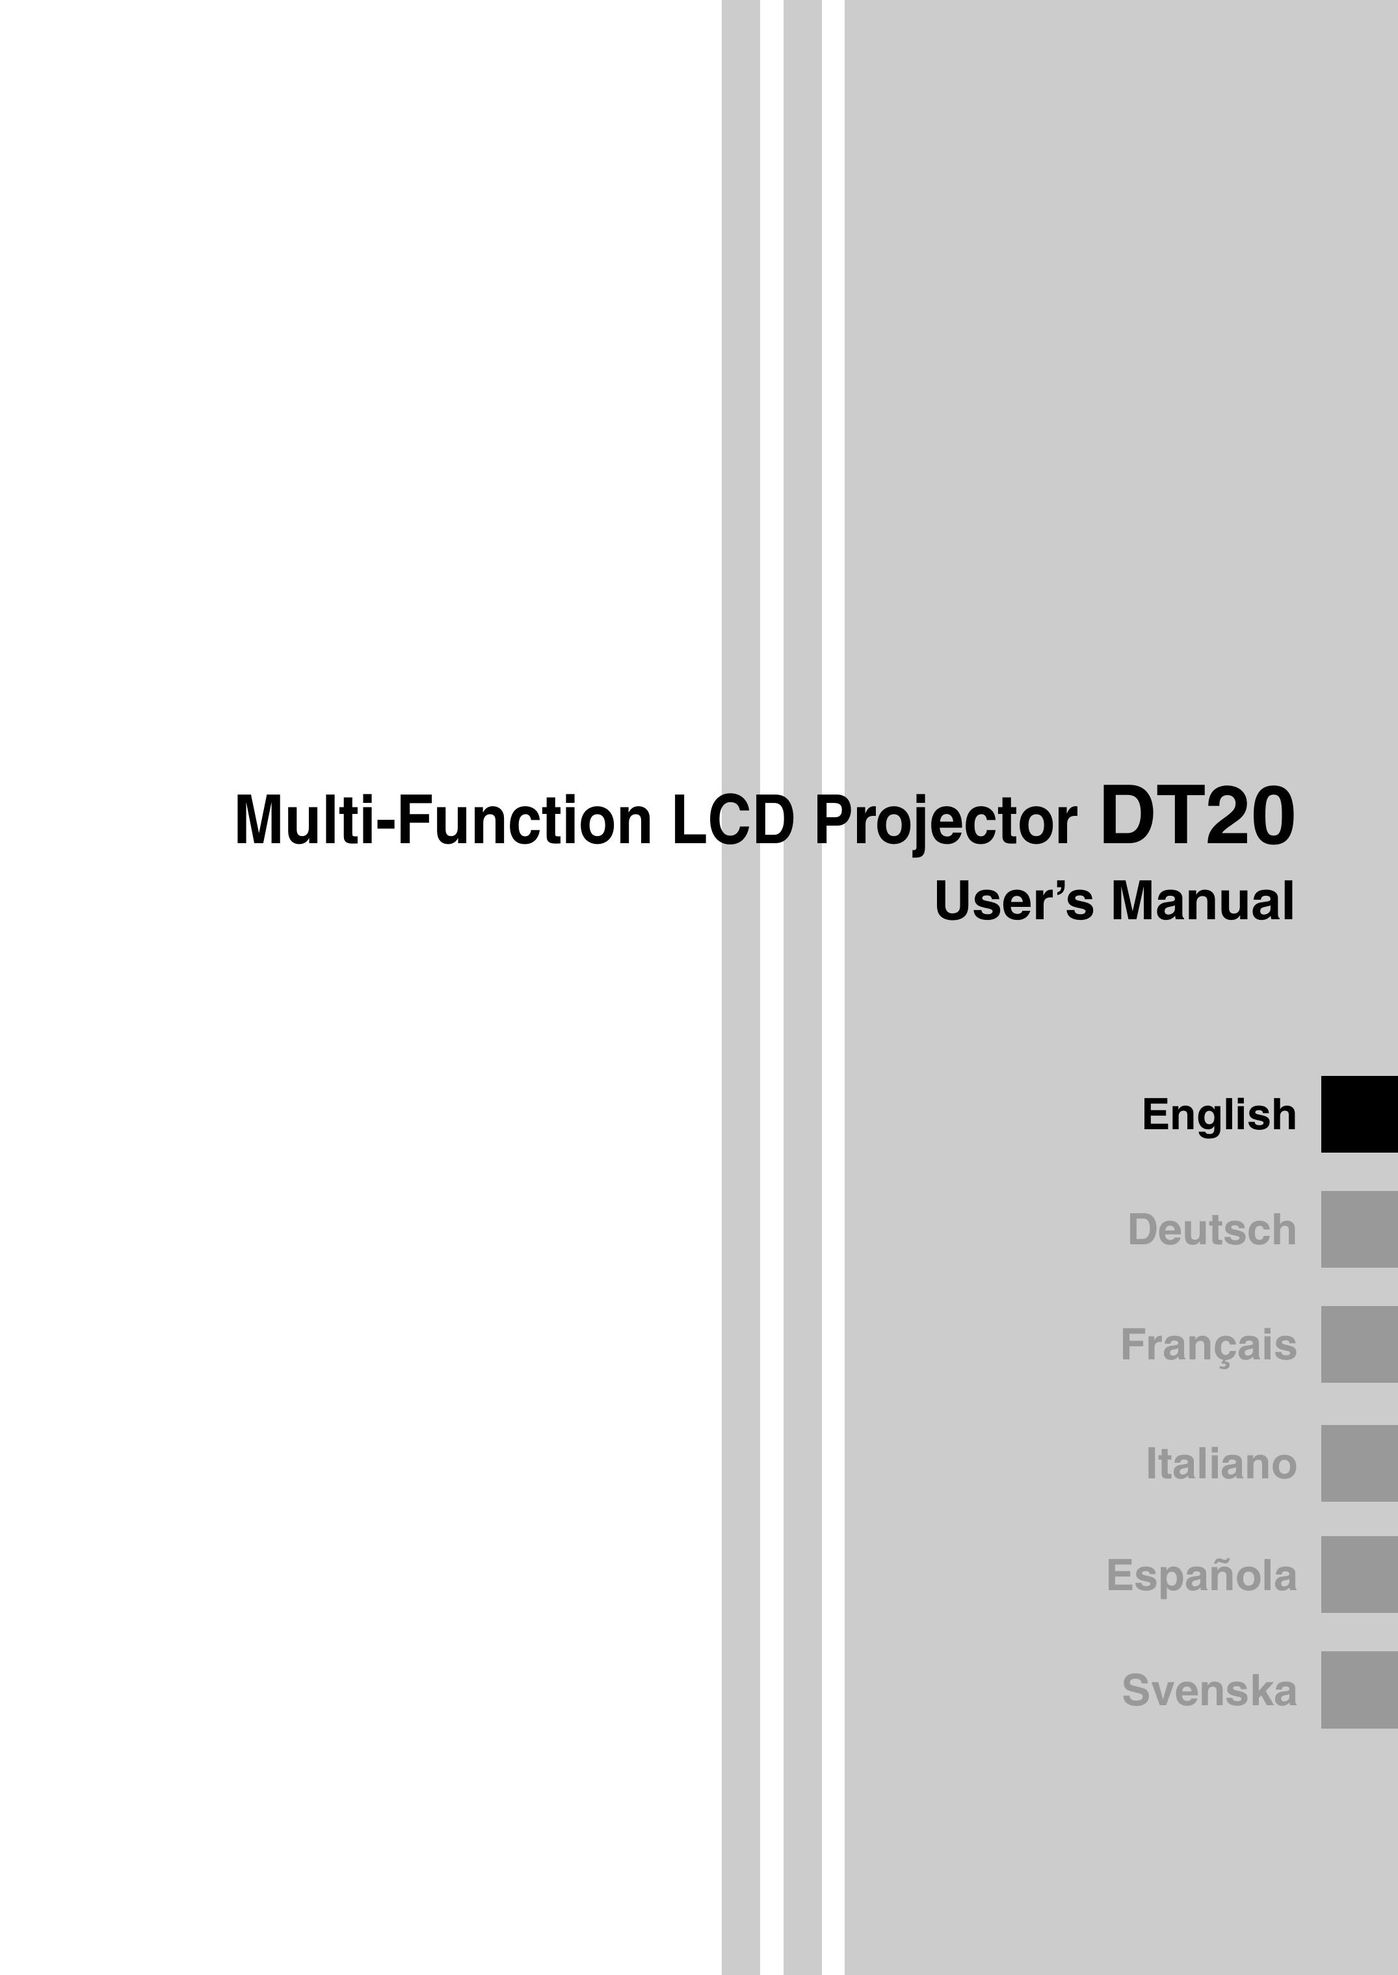 Kensington DT20 Projector User Manual